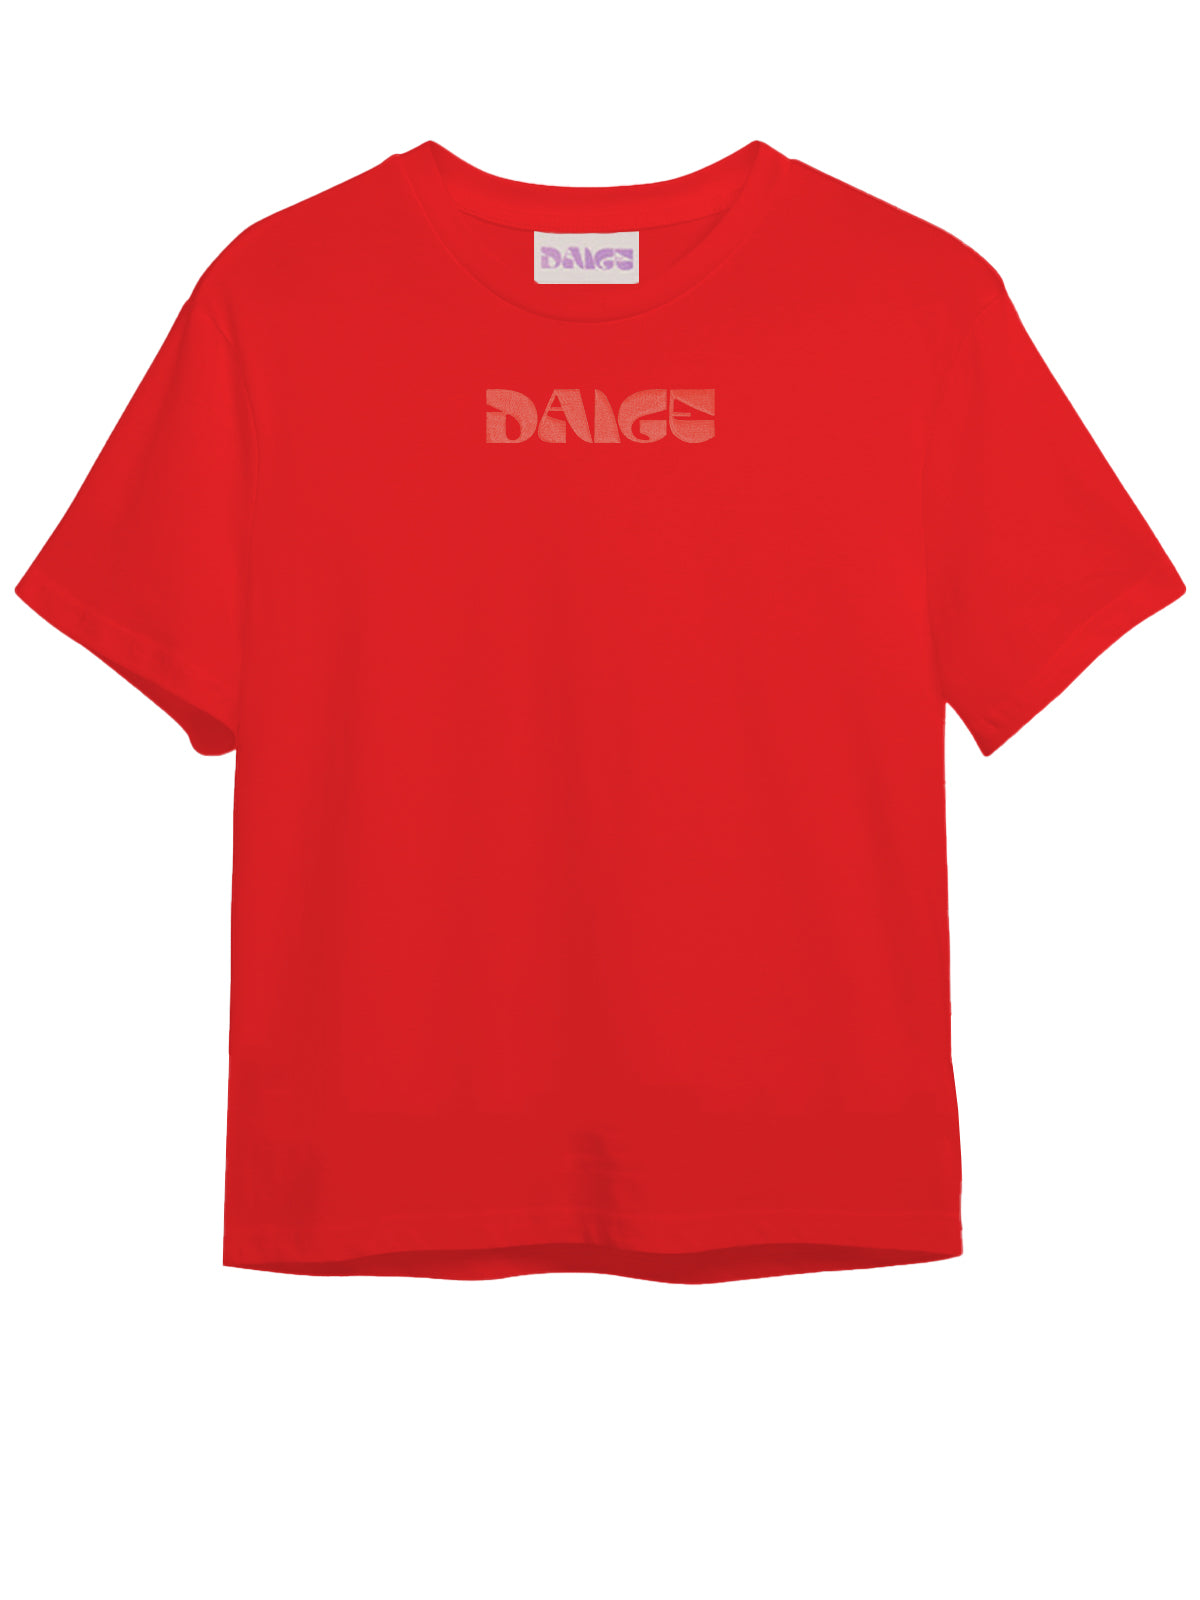 DAIGE logo t-shirt - Poppy red